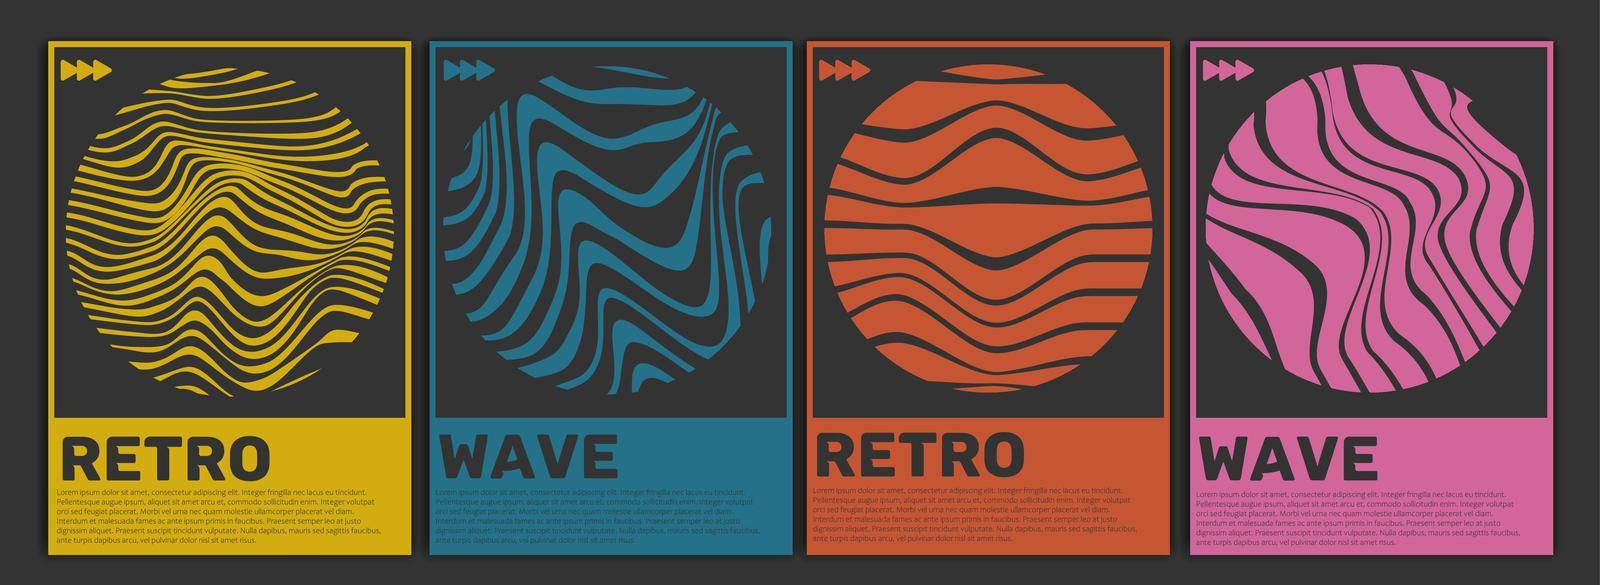 Set of retro swiss design posters. Meta modern graphic desidn elments. Abstract modern geometric covers. Optic illusions art. by iliris